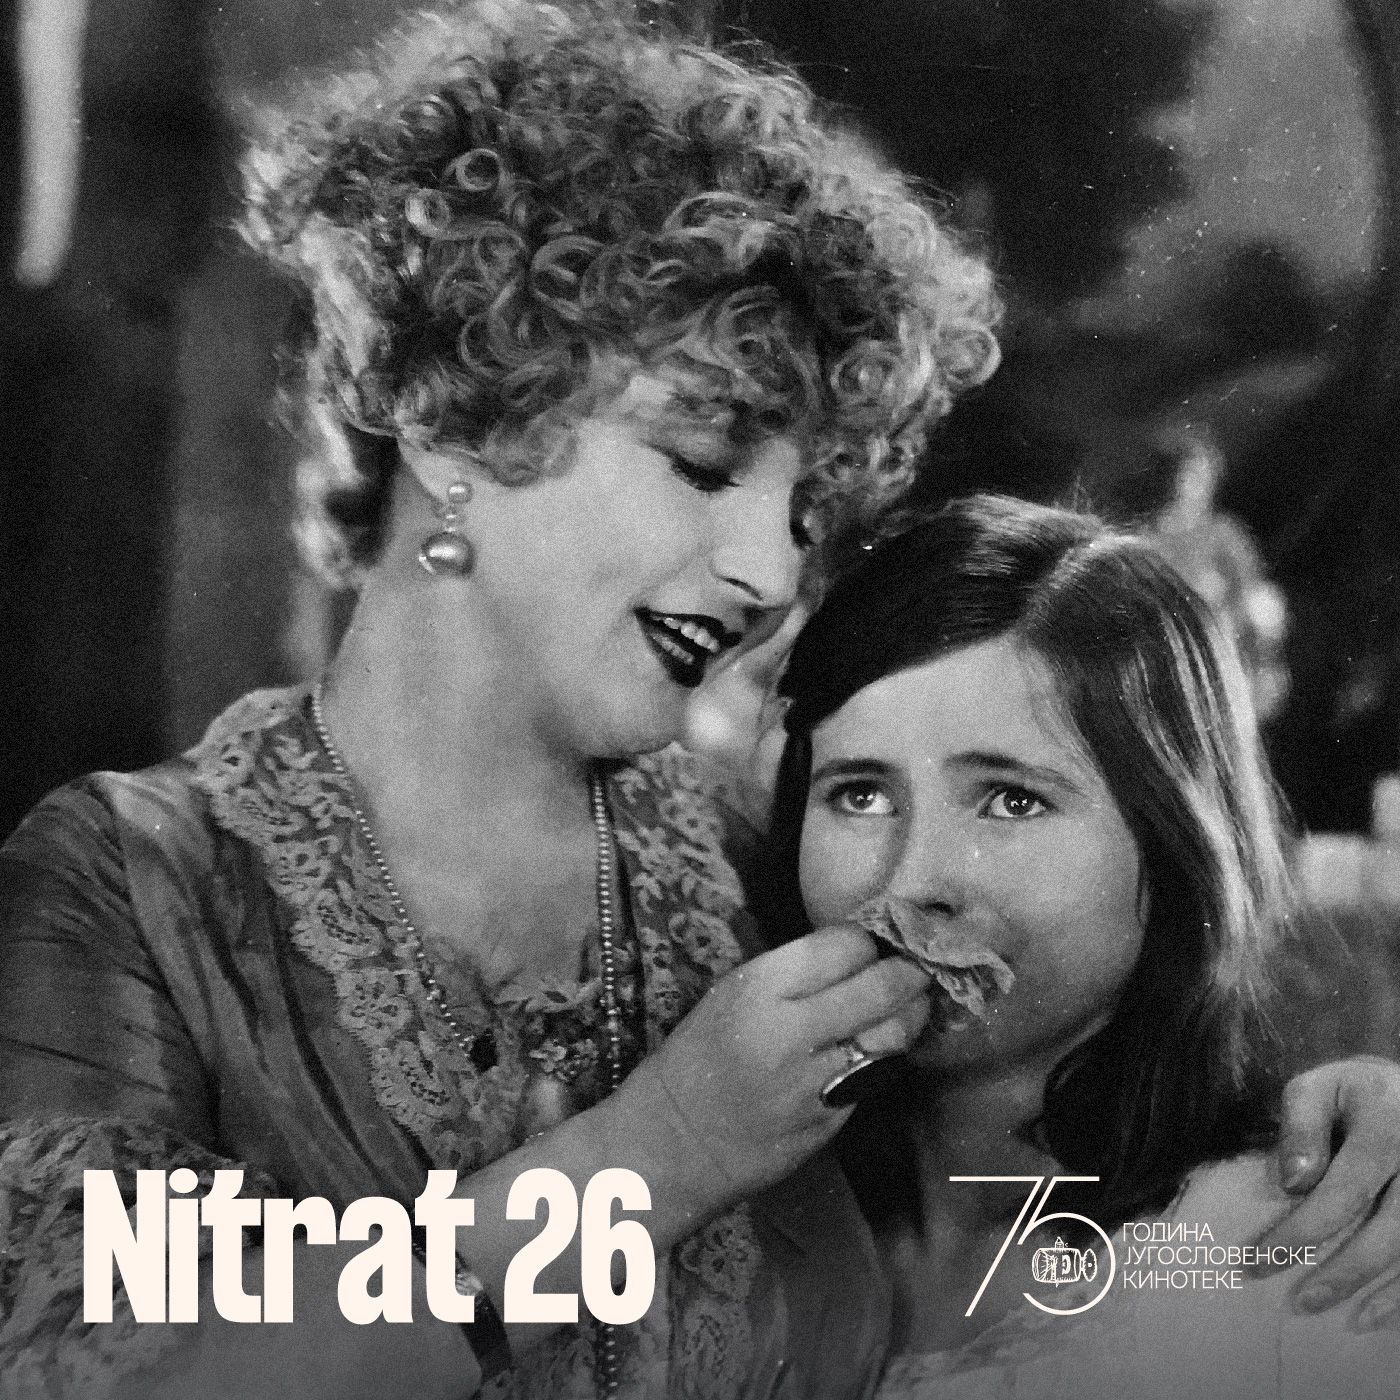 NITRAT 26, najava programa, web ig post-14